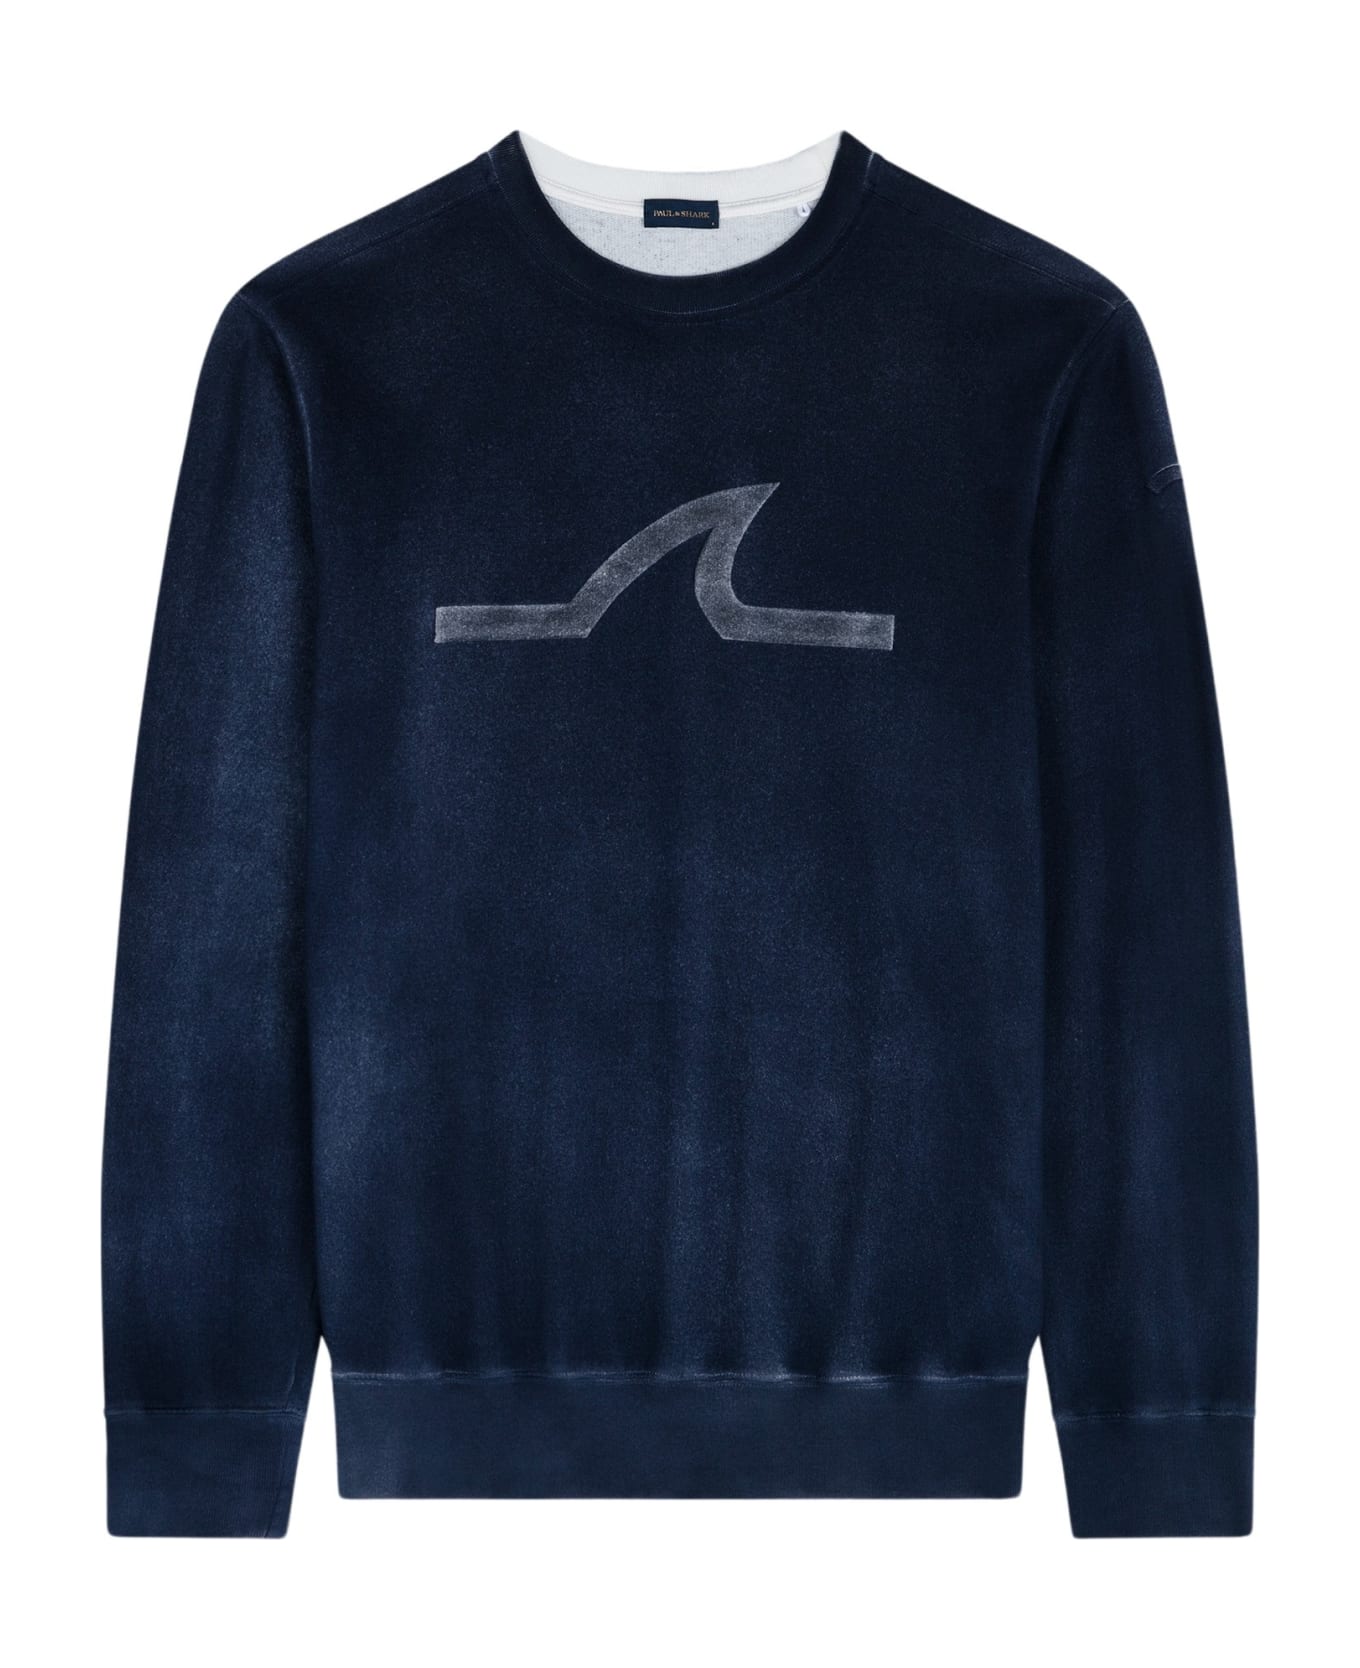 Paul&Shark Sweatshirt - Blue